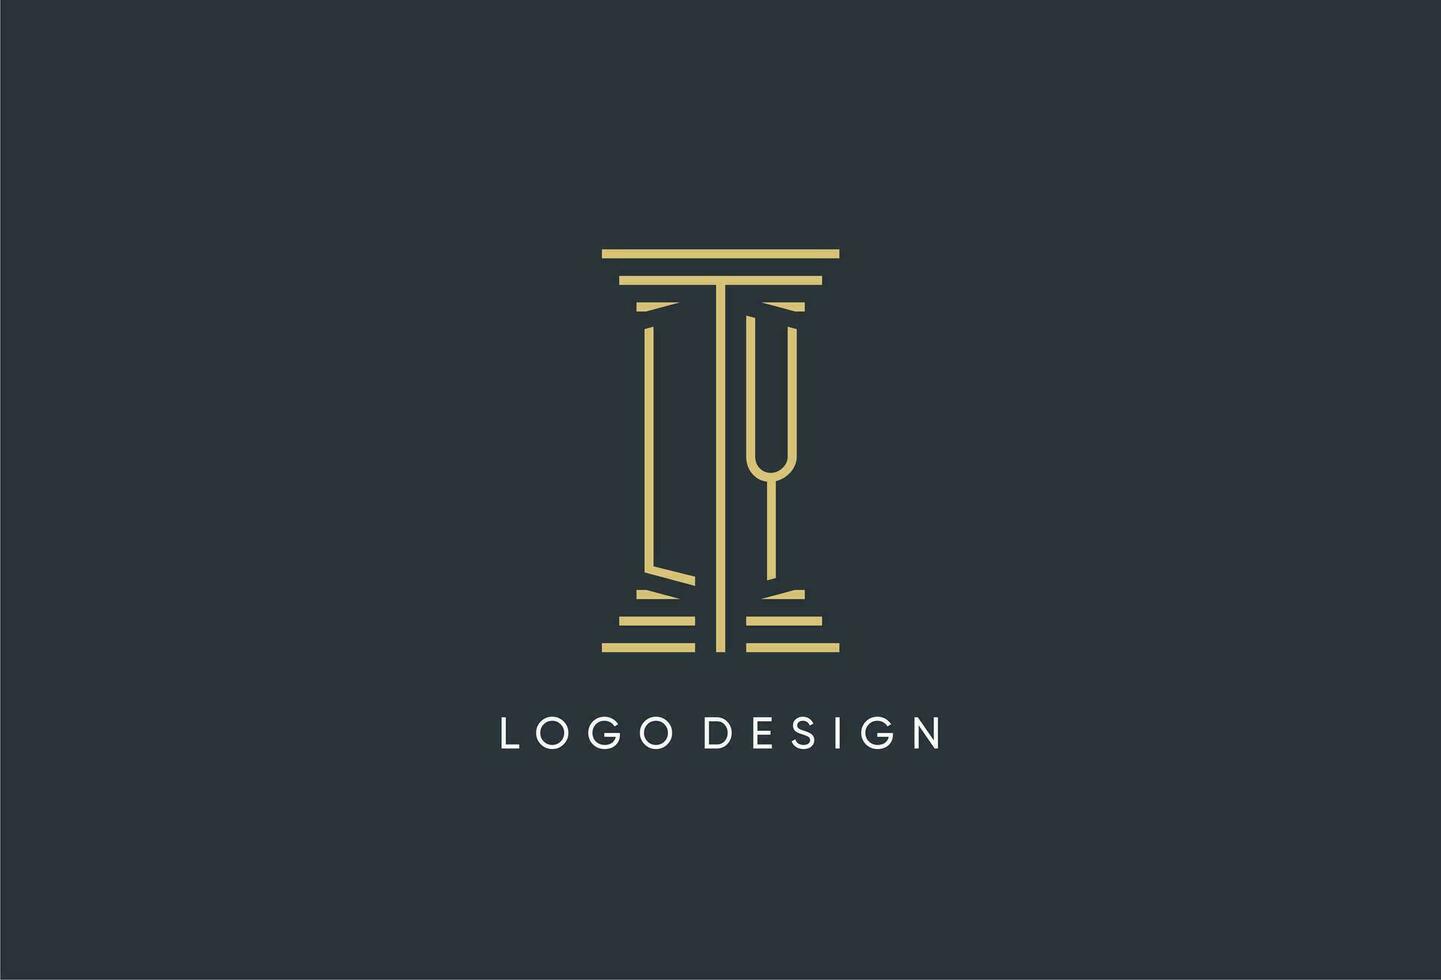 LY initial monogram with pillar shape logo design vector